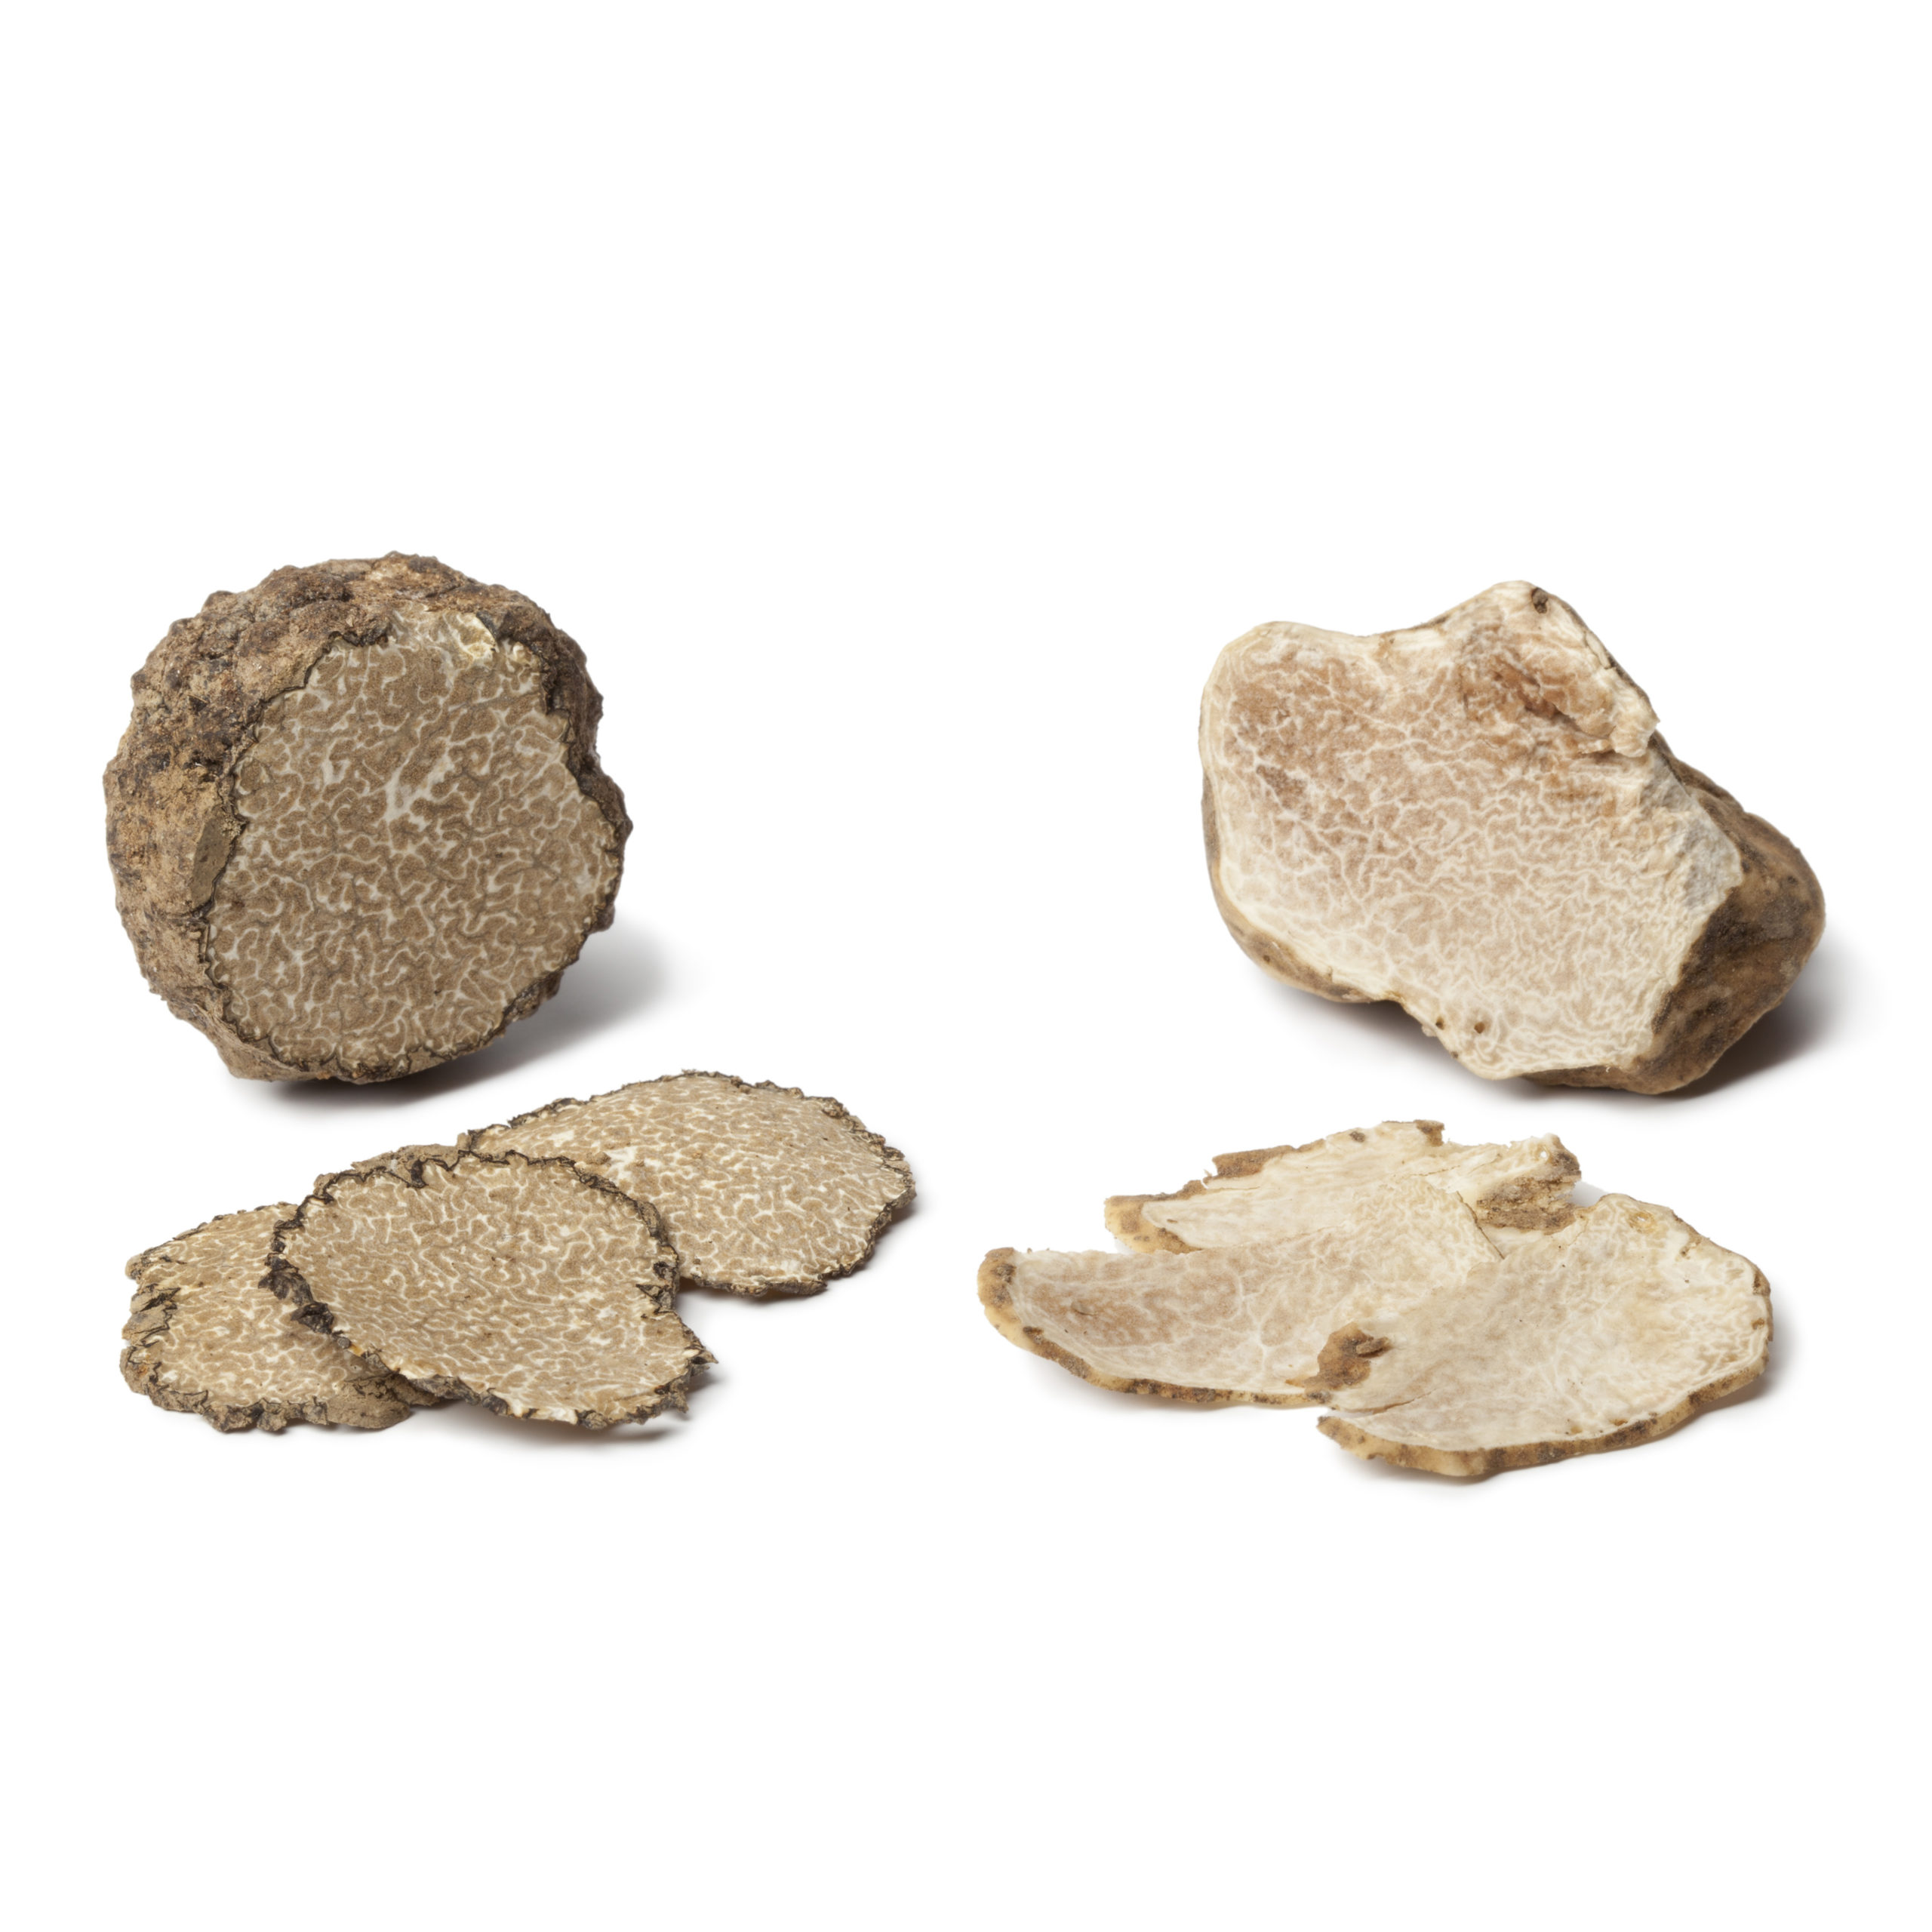 black truffle salt, best truffle salt, what is truffle salt, uses for truffle salt, truffle salt uses